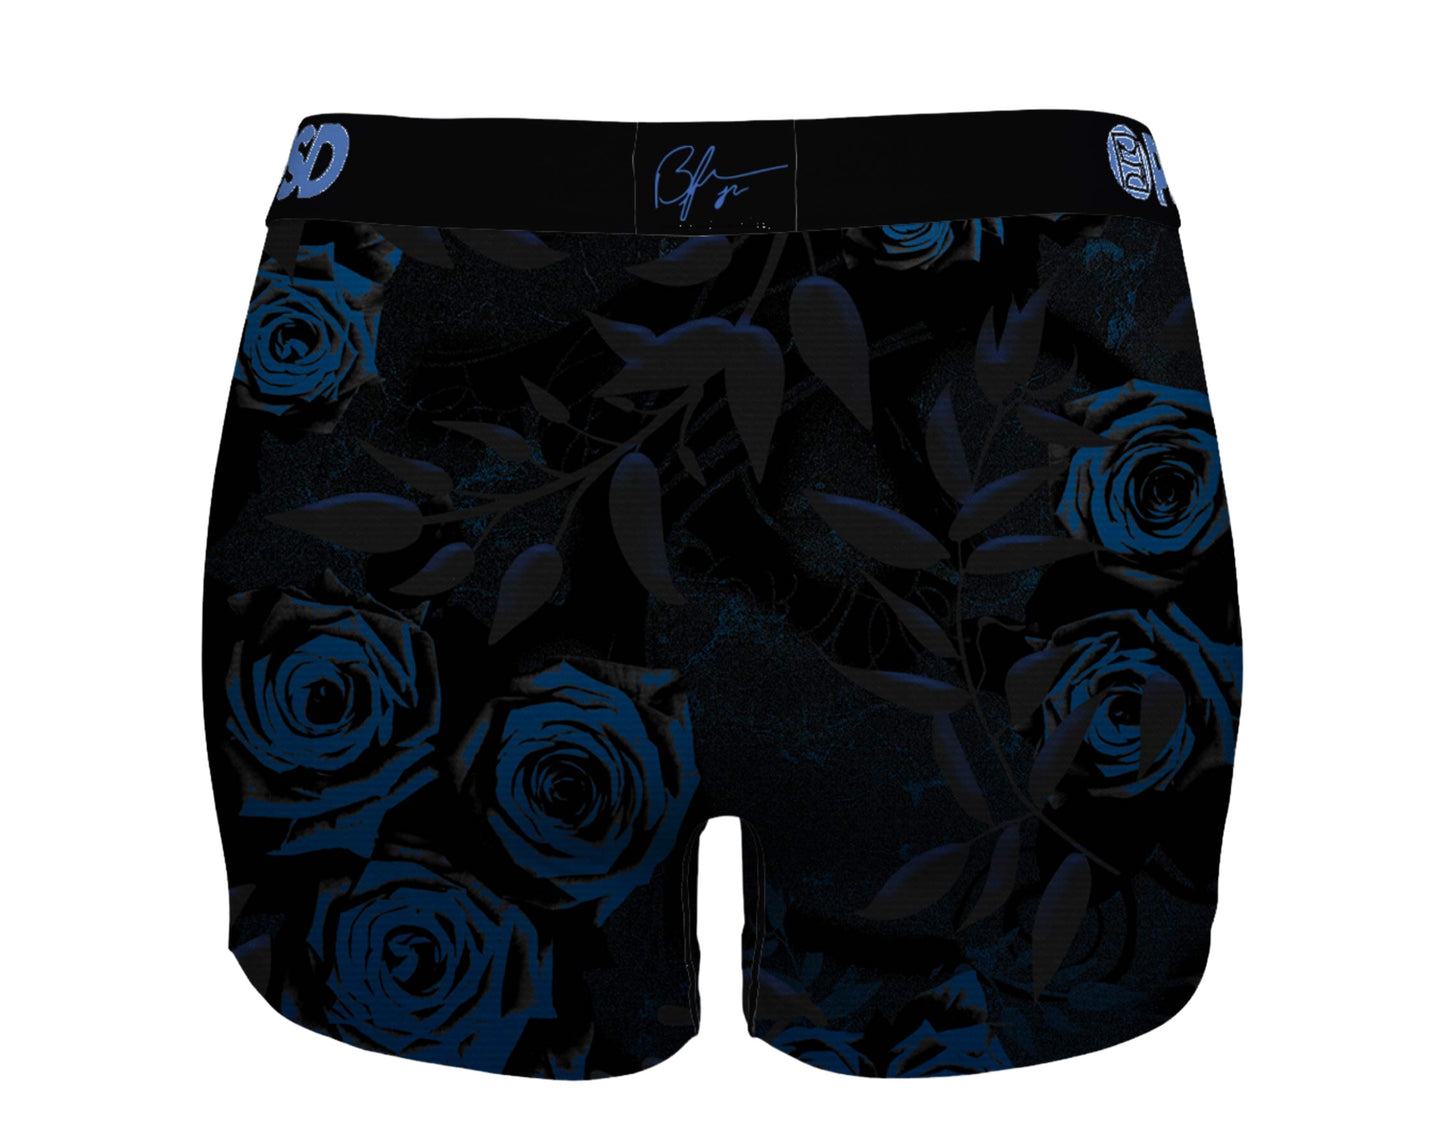 PSD x Bronny - Steel Floral Women's Boy Shorts